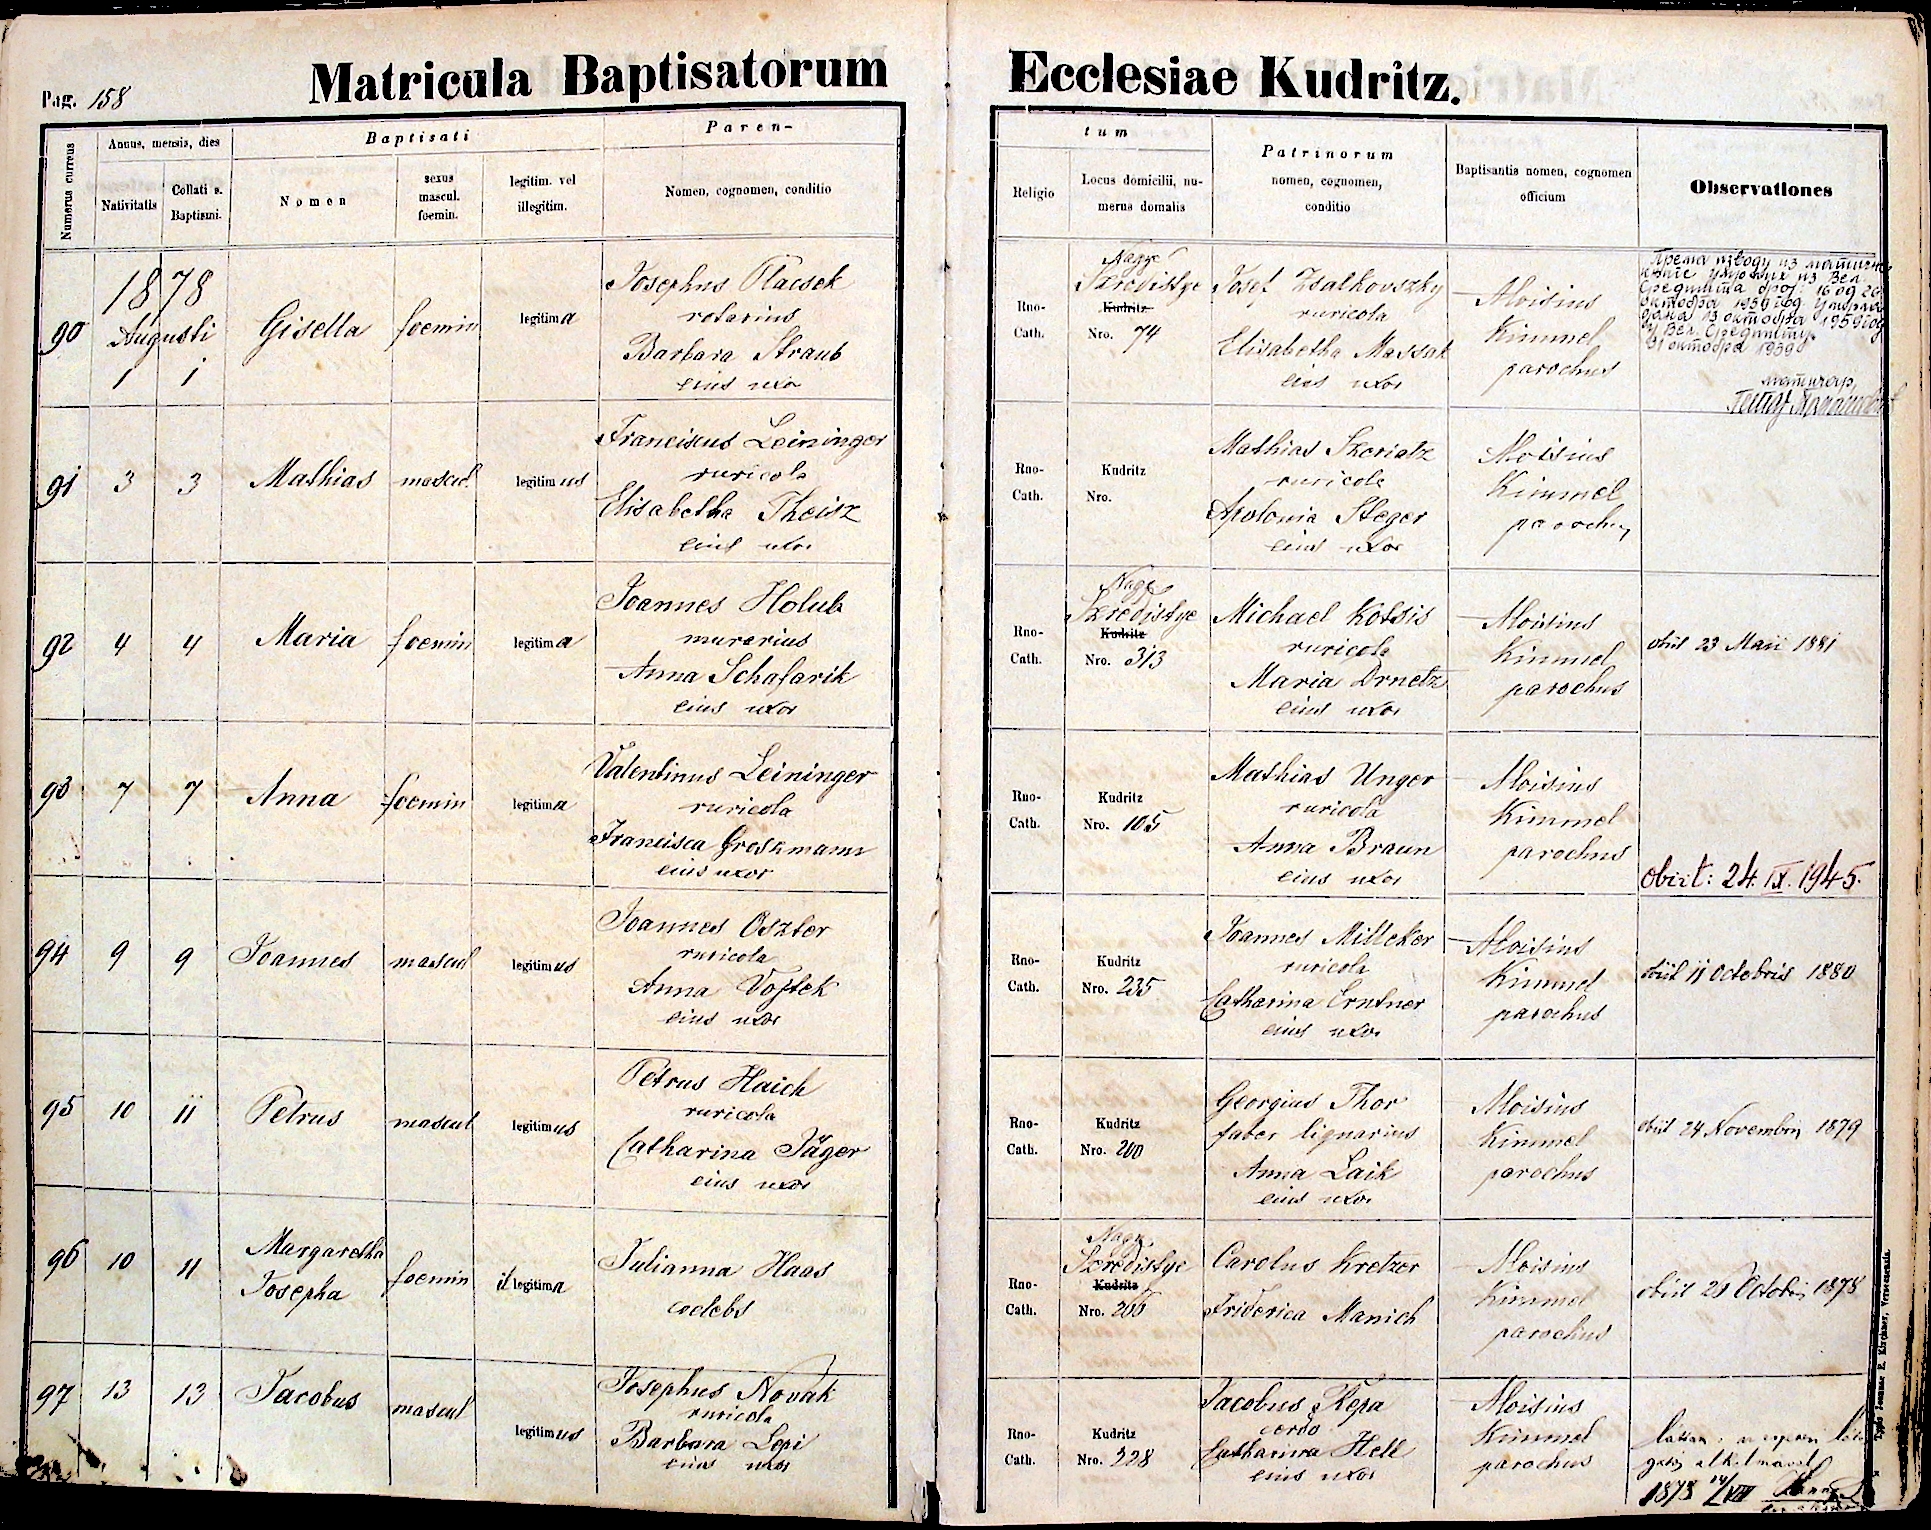 images/church_records/BIRTHS/1870-1879B/1878/158